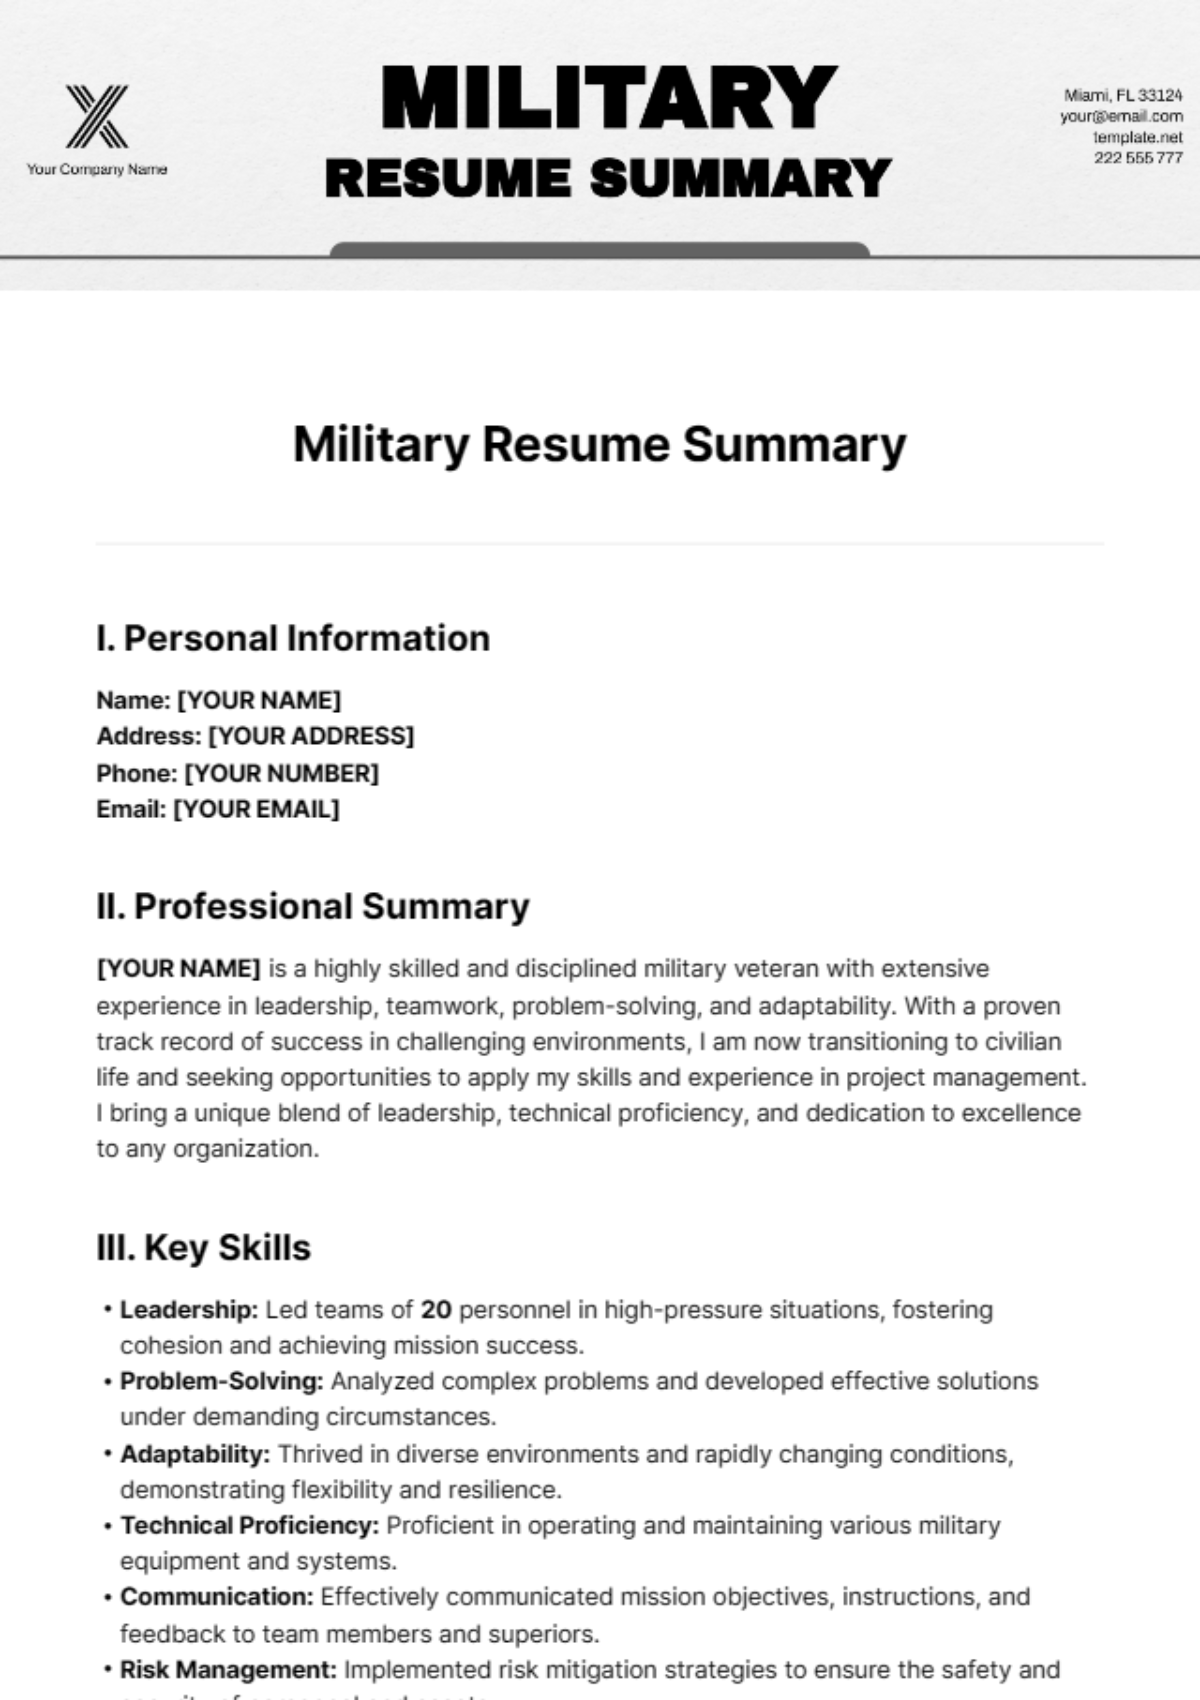 Free Military Resume Summary Template